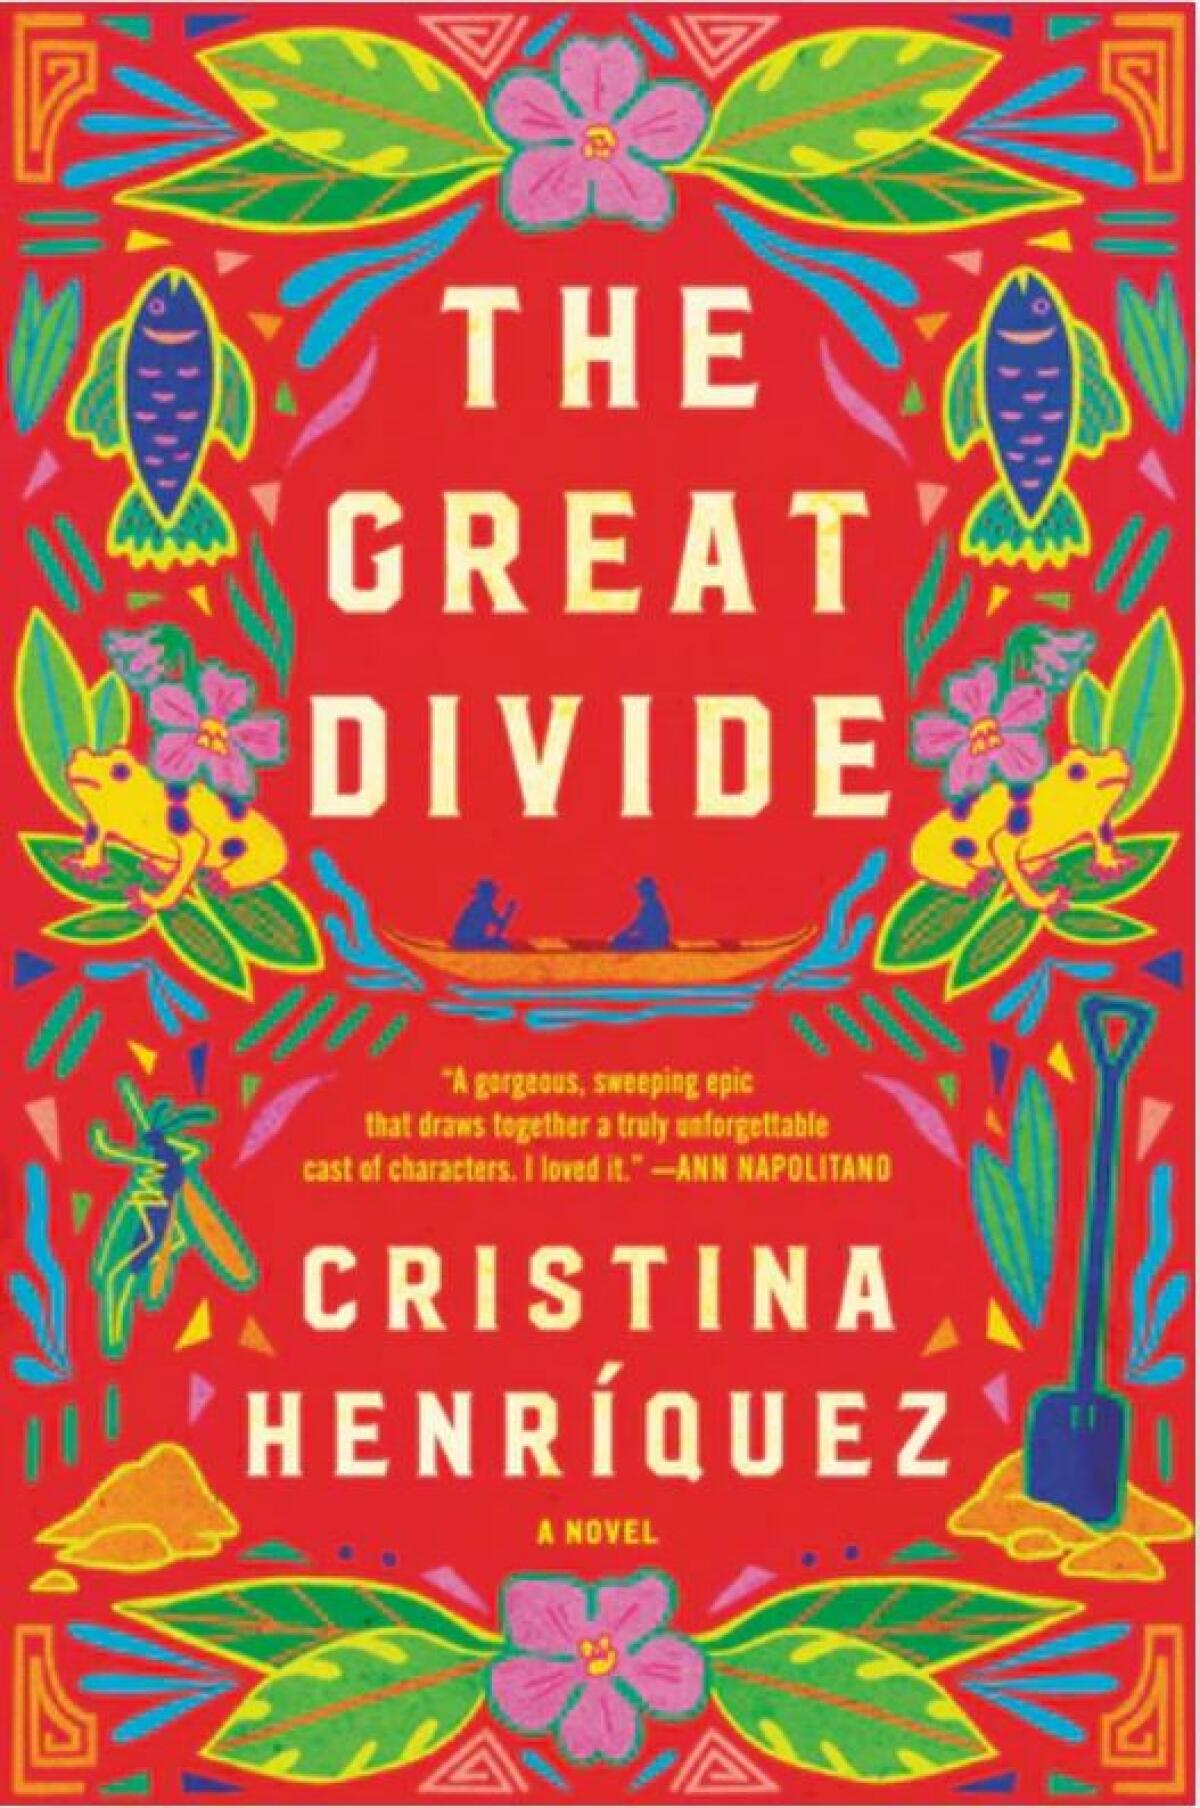 "The Great Divide" by Cristina Henriquez